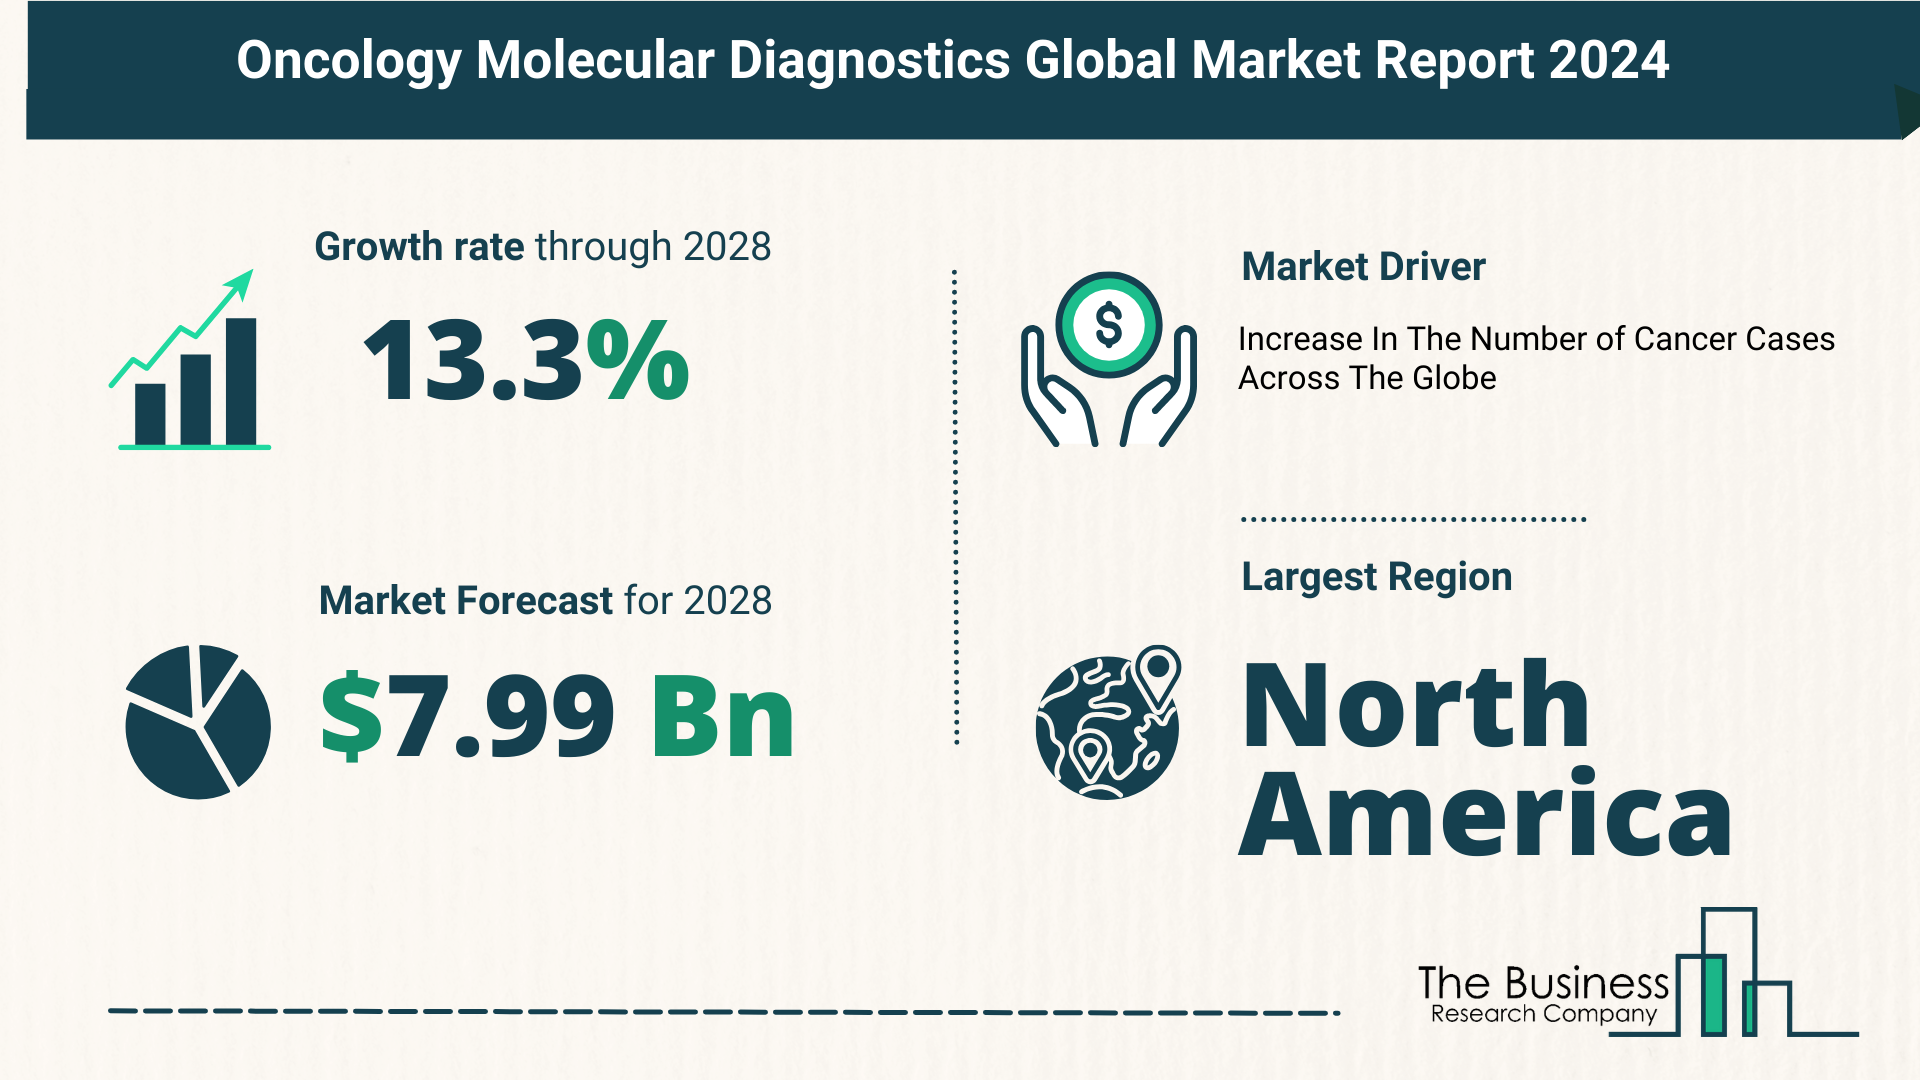 Global Oncology Molecular Diagnostics Market